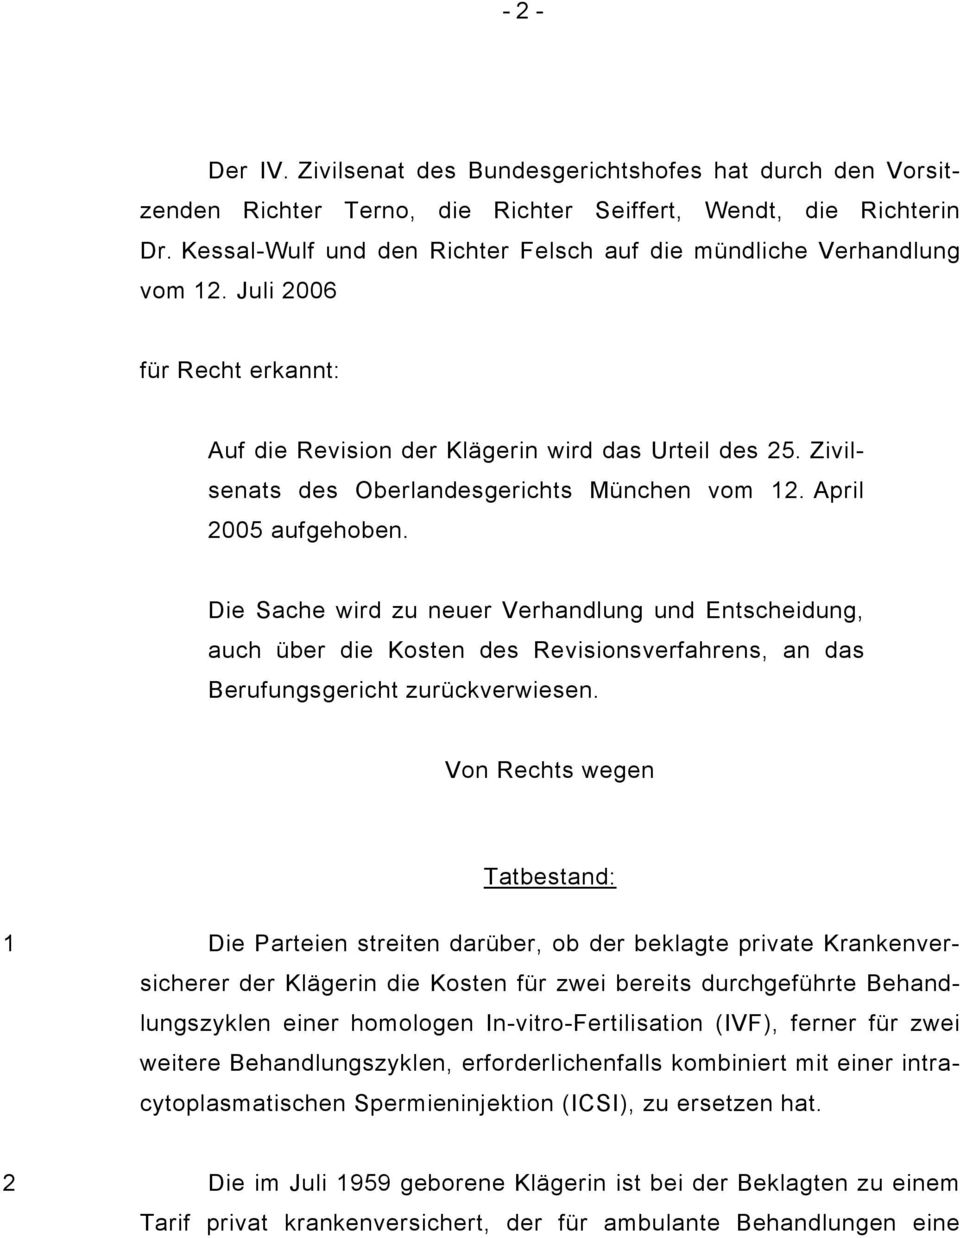 Zivilsenats des Oberlandesgerichts München vom 12. April 2005 aufgehoben.